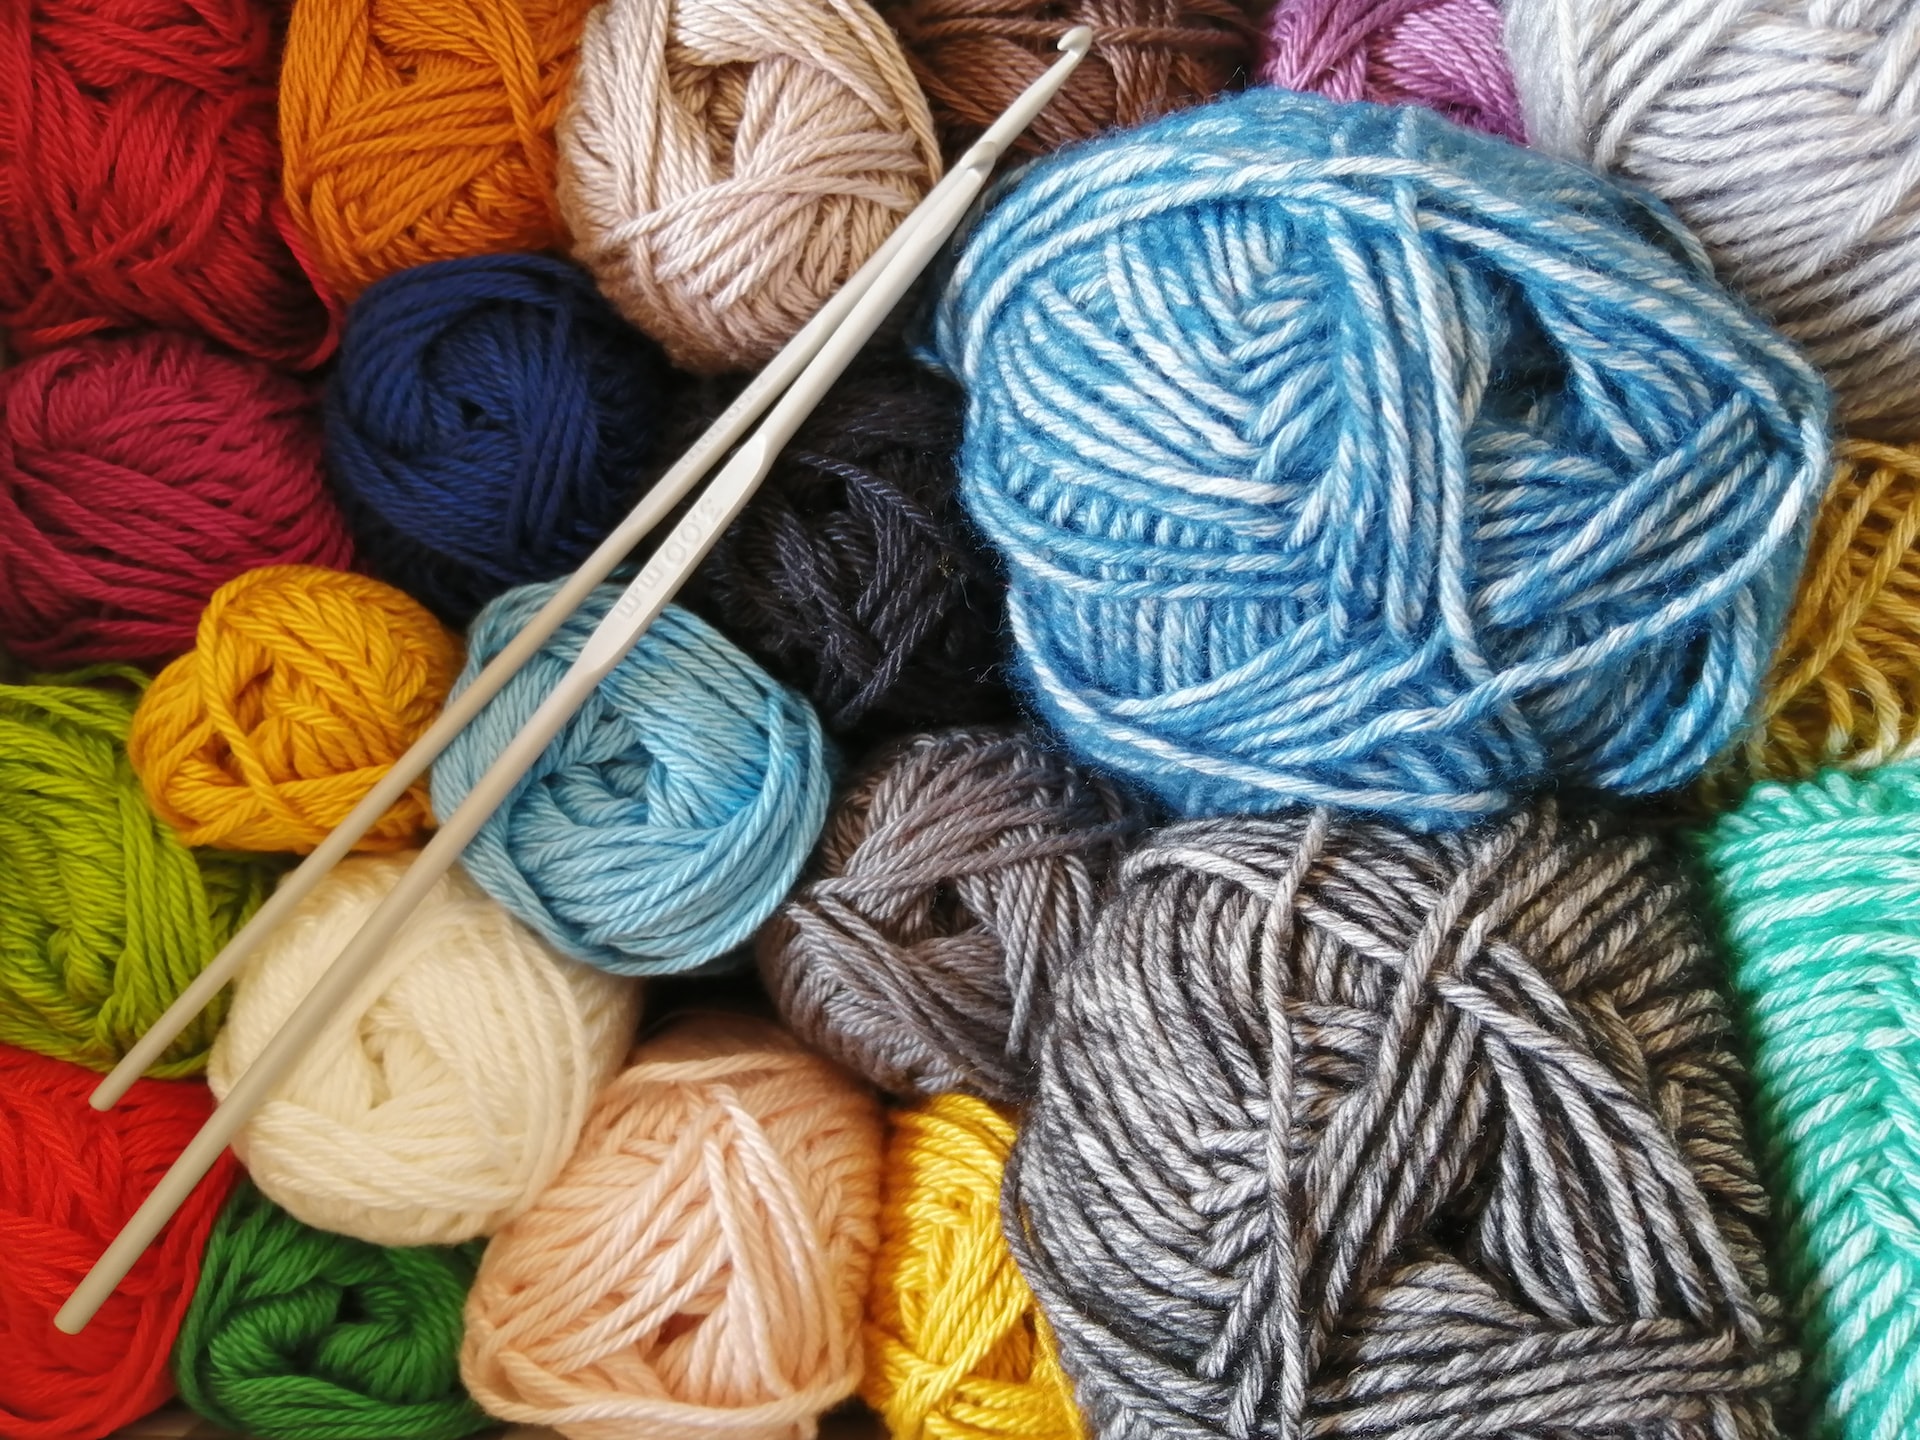 several colorful balls of wool yarn